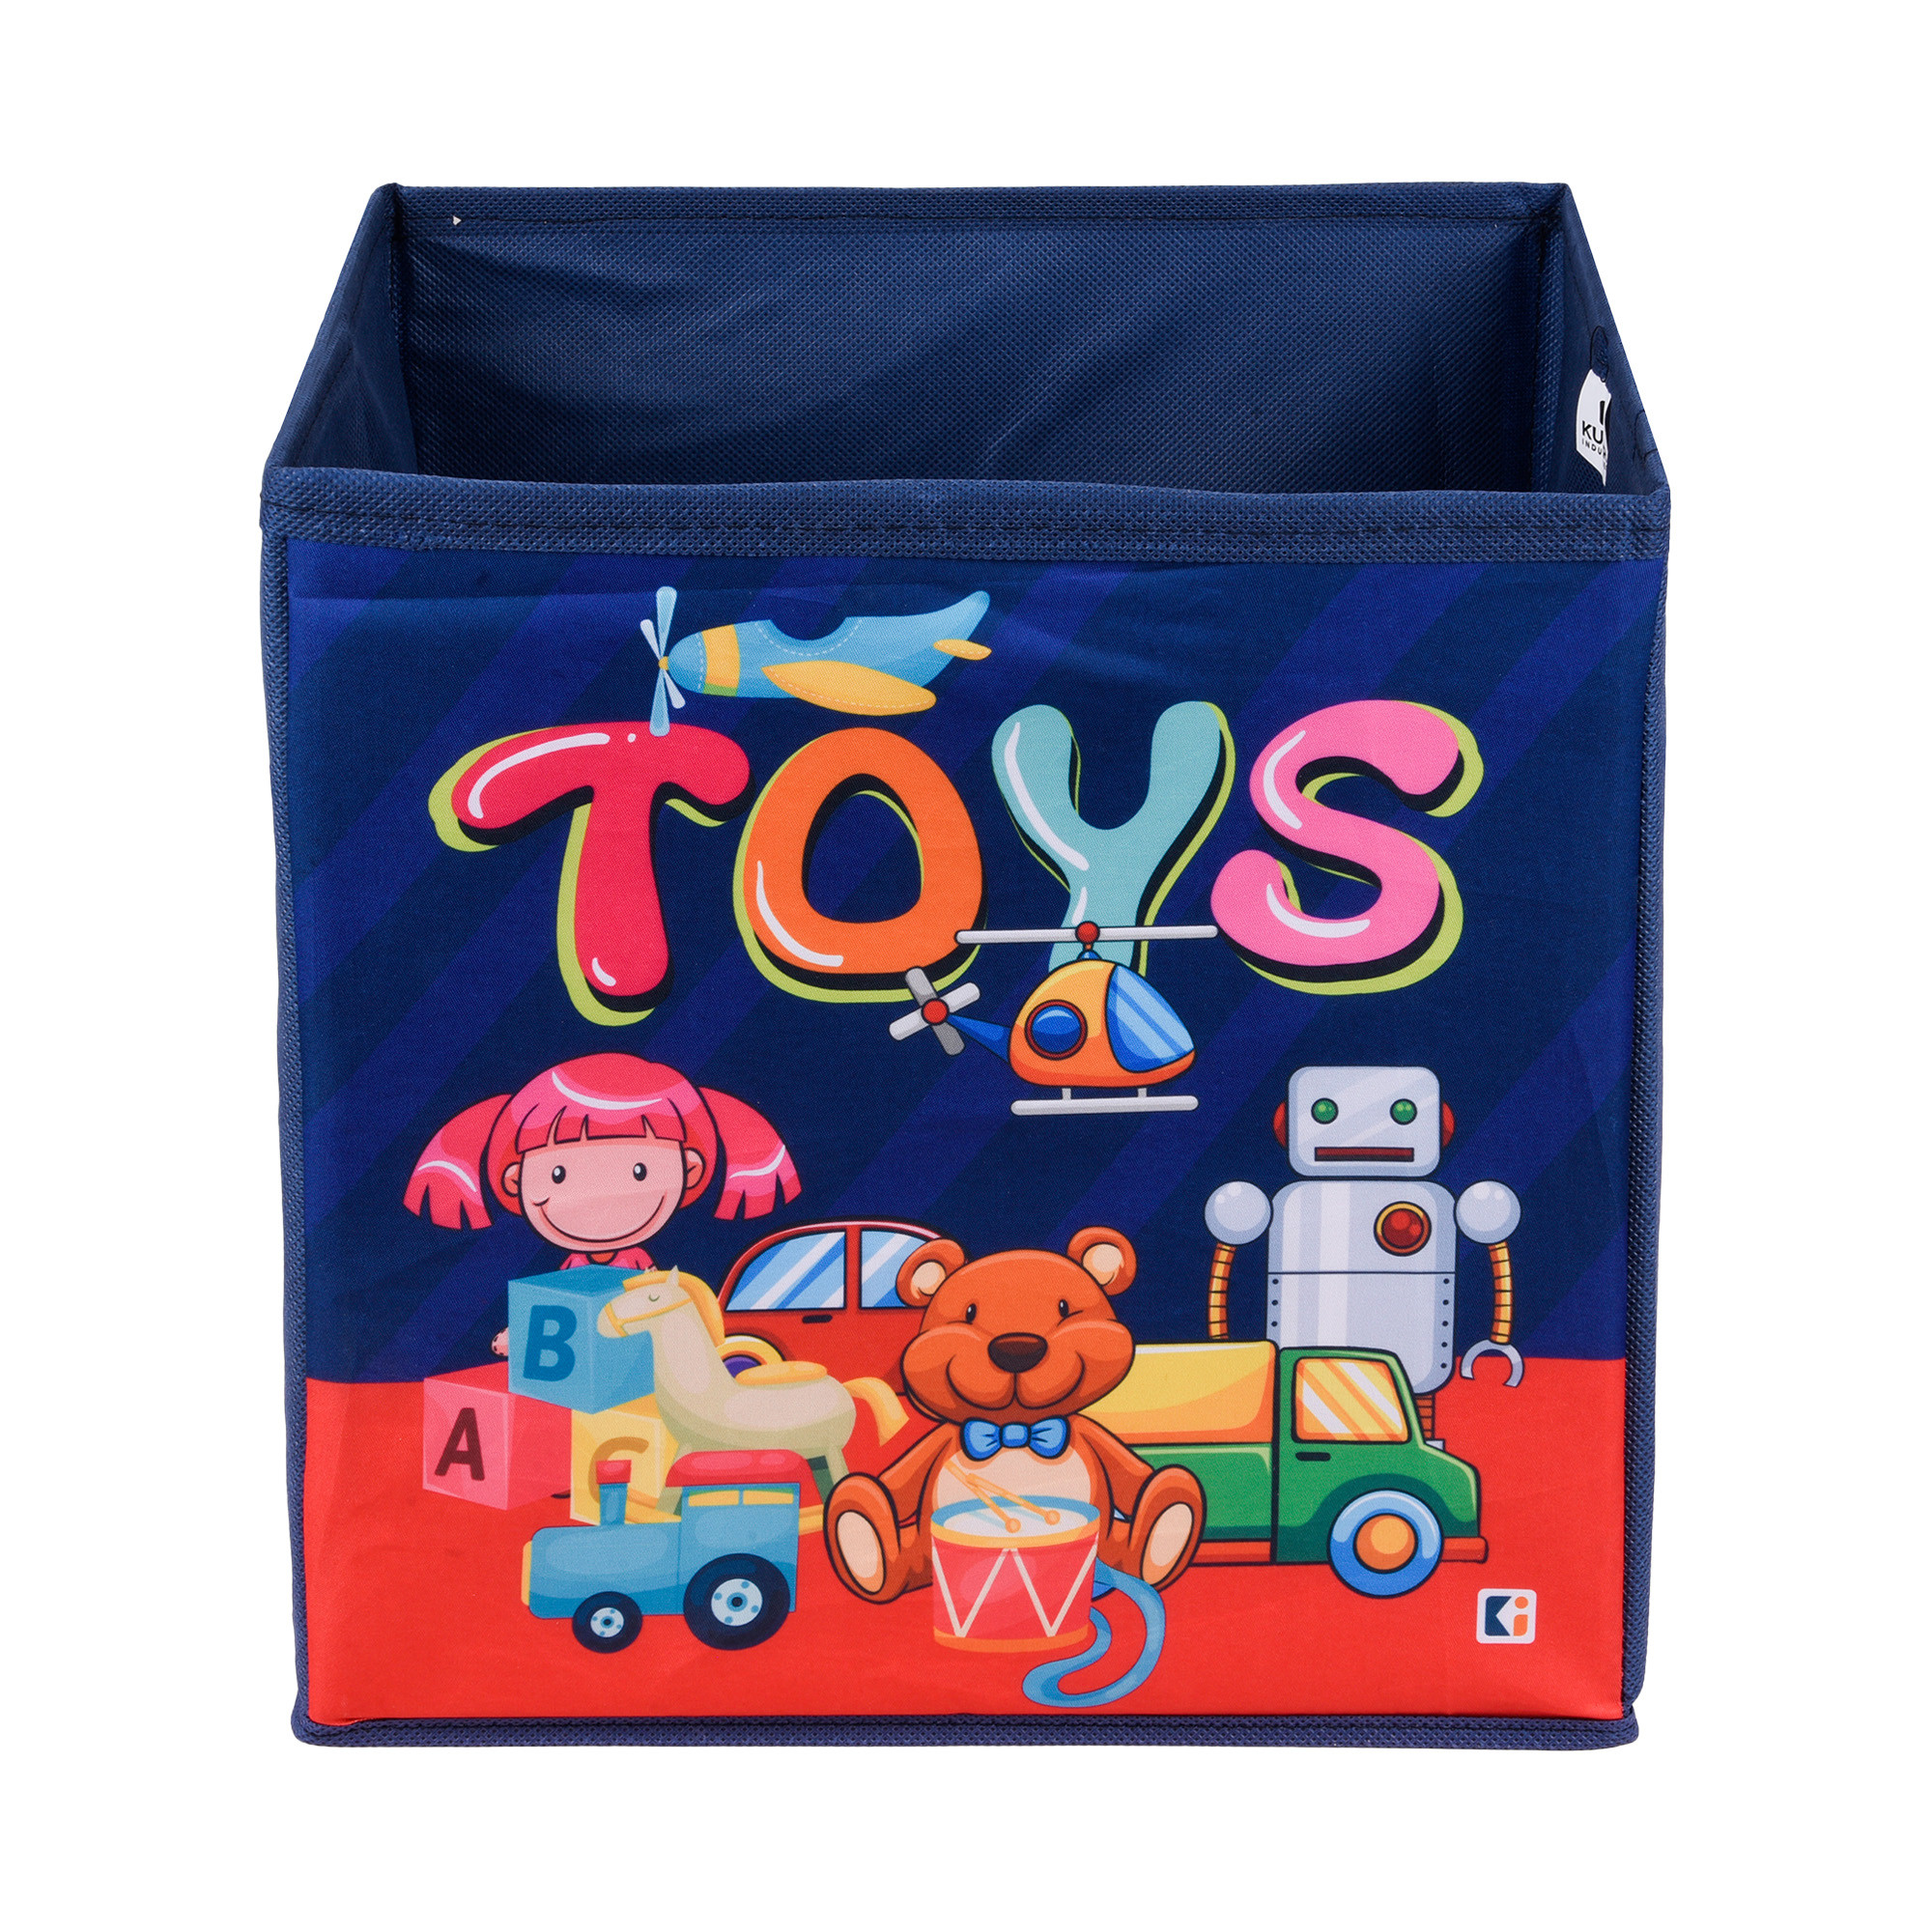 Kuber Industries Storage Box | Square Toy Storage Box | Wardrobe Organizer for Clothes-Books-Toys-Stationary | Drawer Organizer Box with Handle | Disney-Print | Navy Blue & Sky Blue